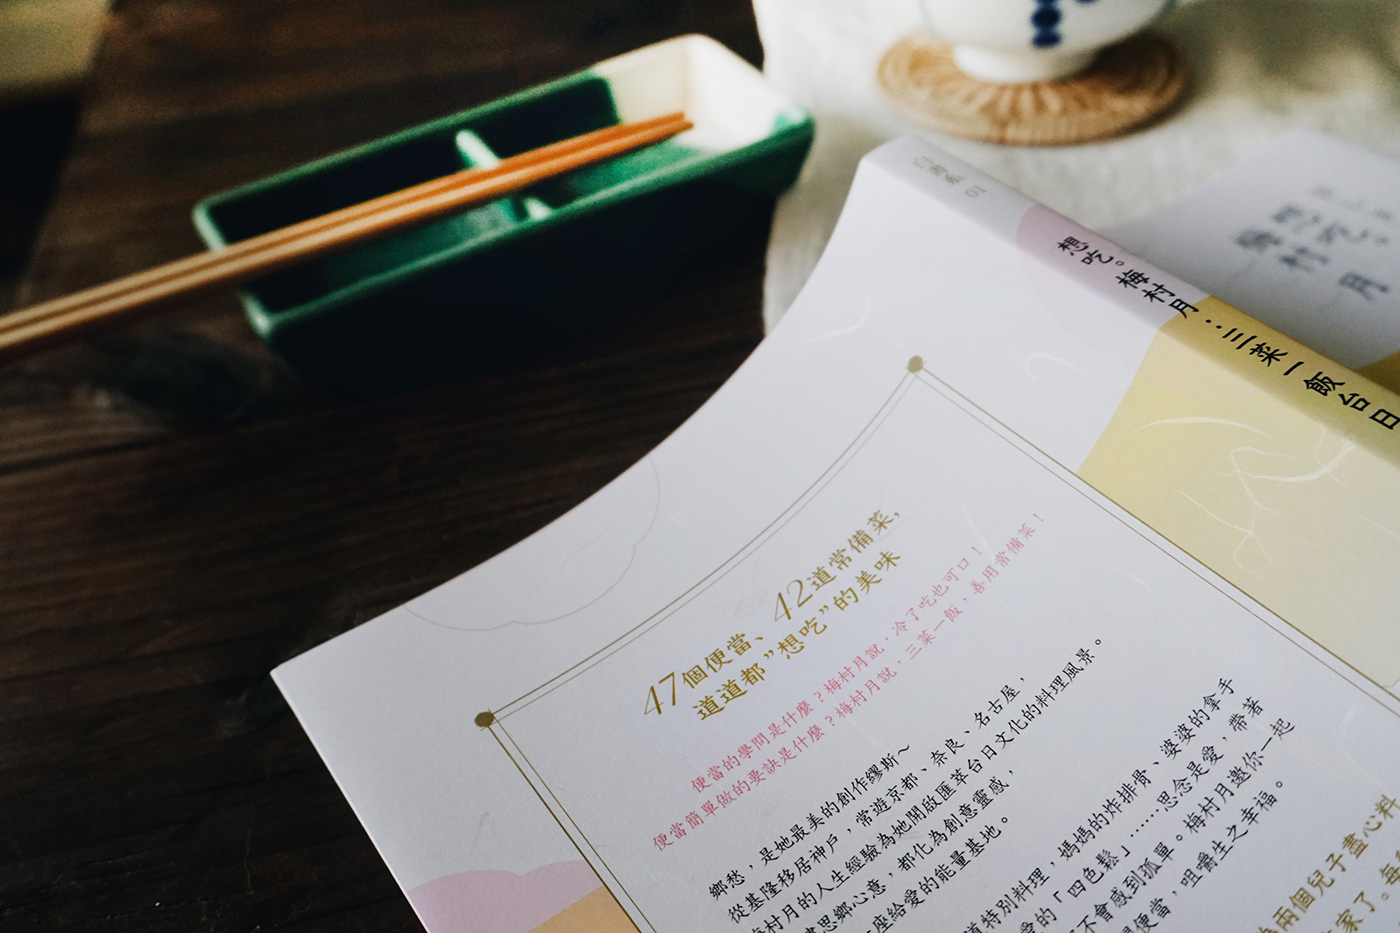 bento book japan recipe sakura 弁当 日式 櫻花 美味 食譜